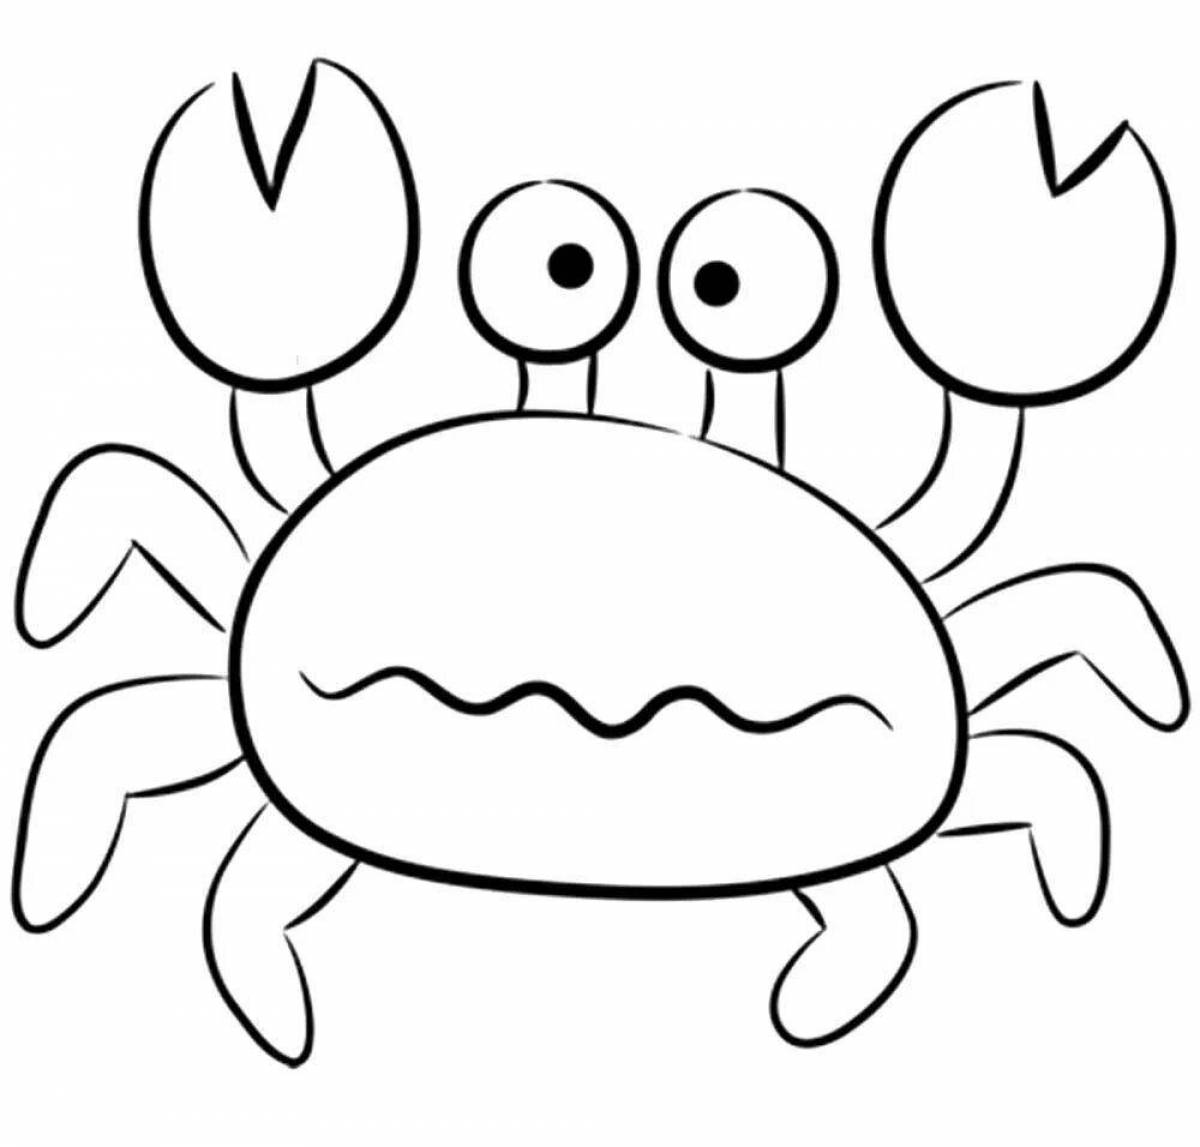 Coloring page joyful crab